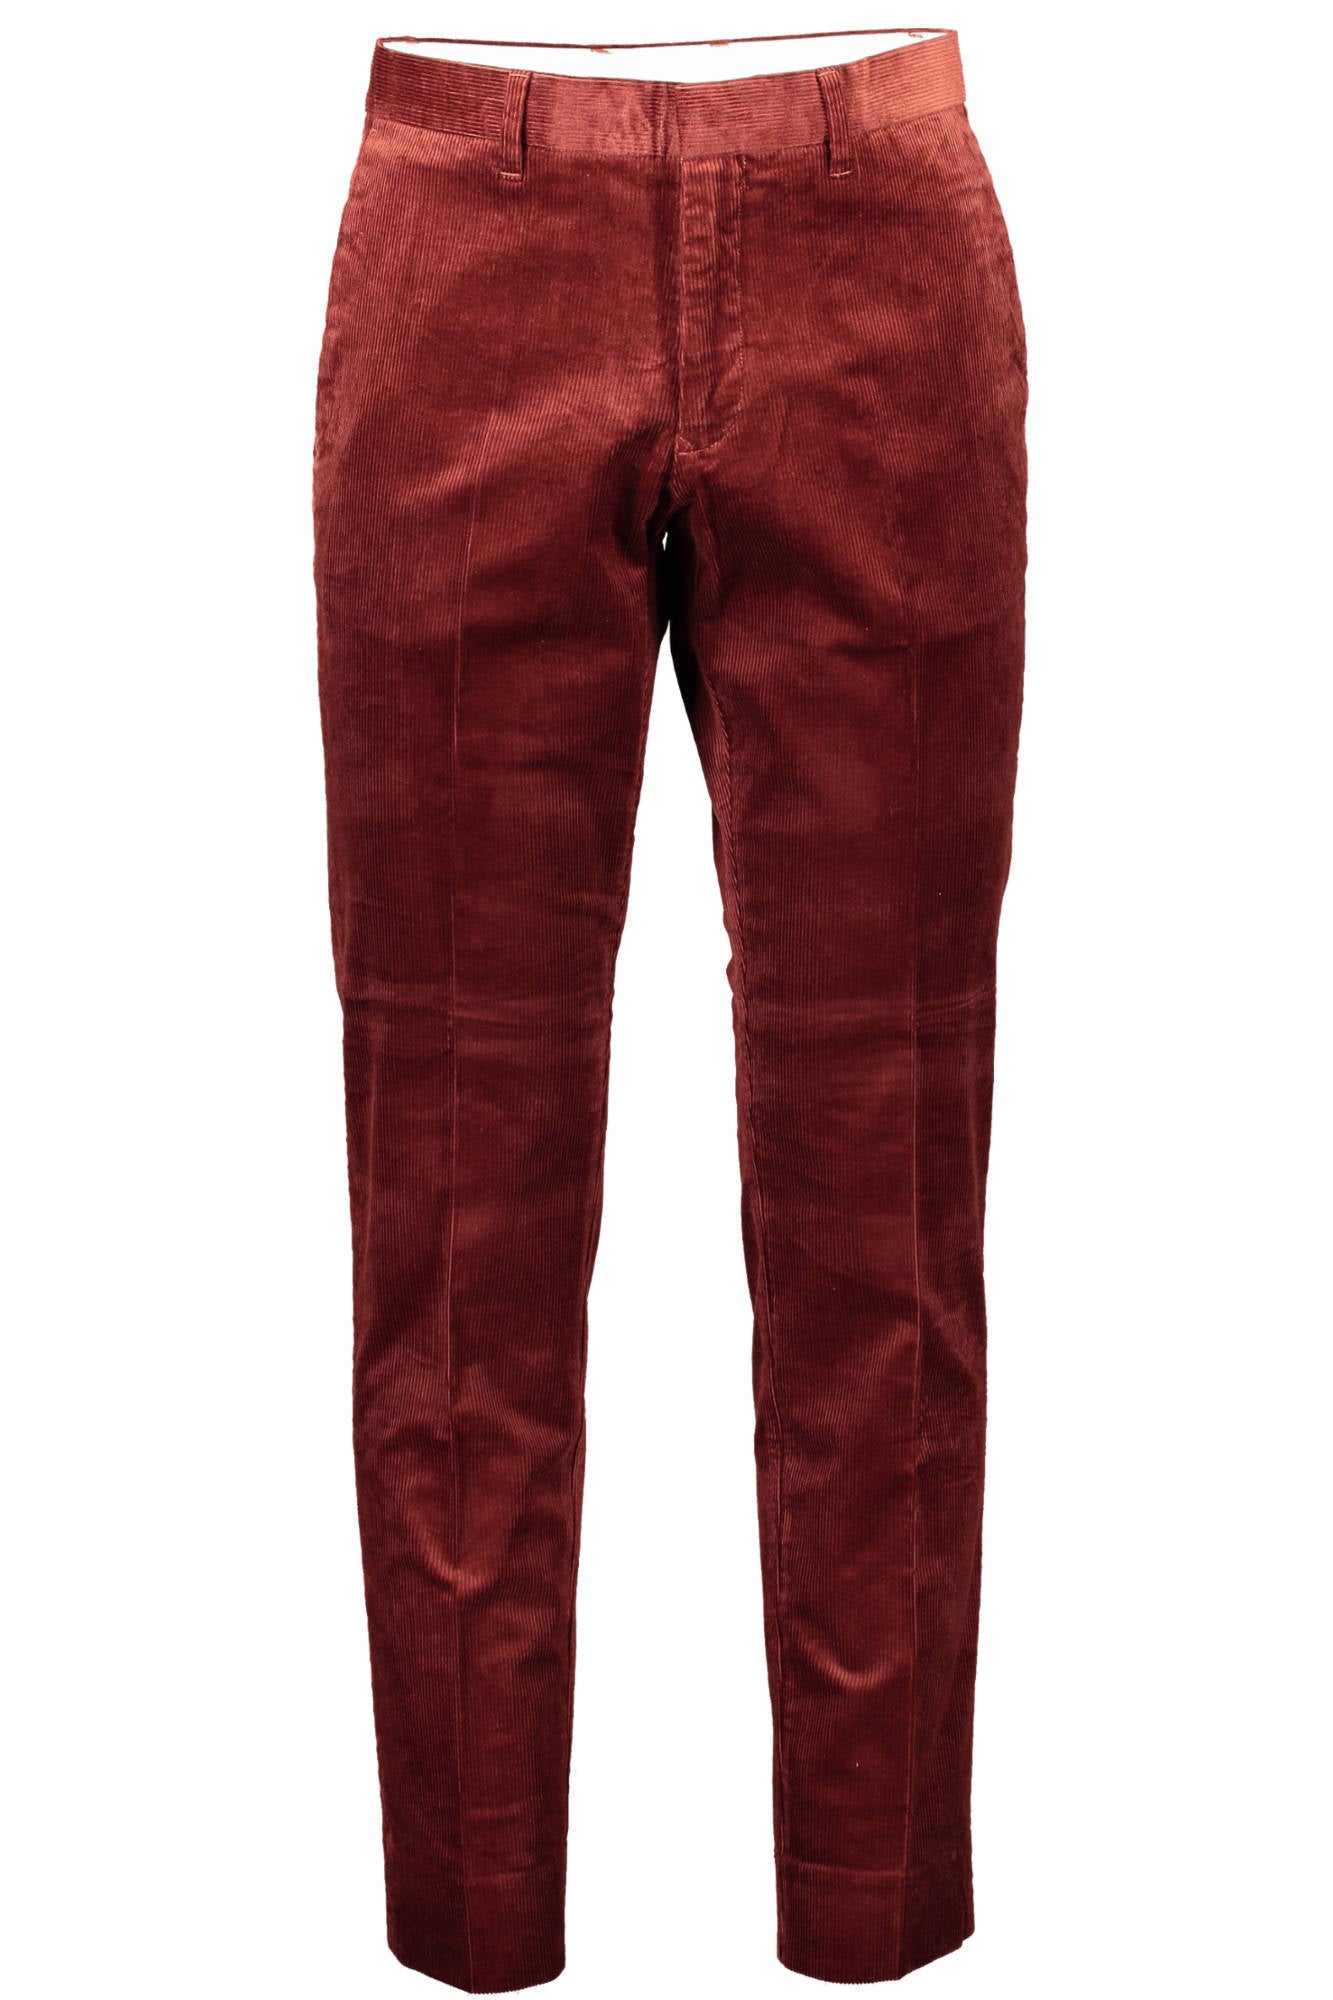 Gant Red Jeans & Pant - Fizigo